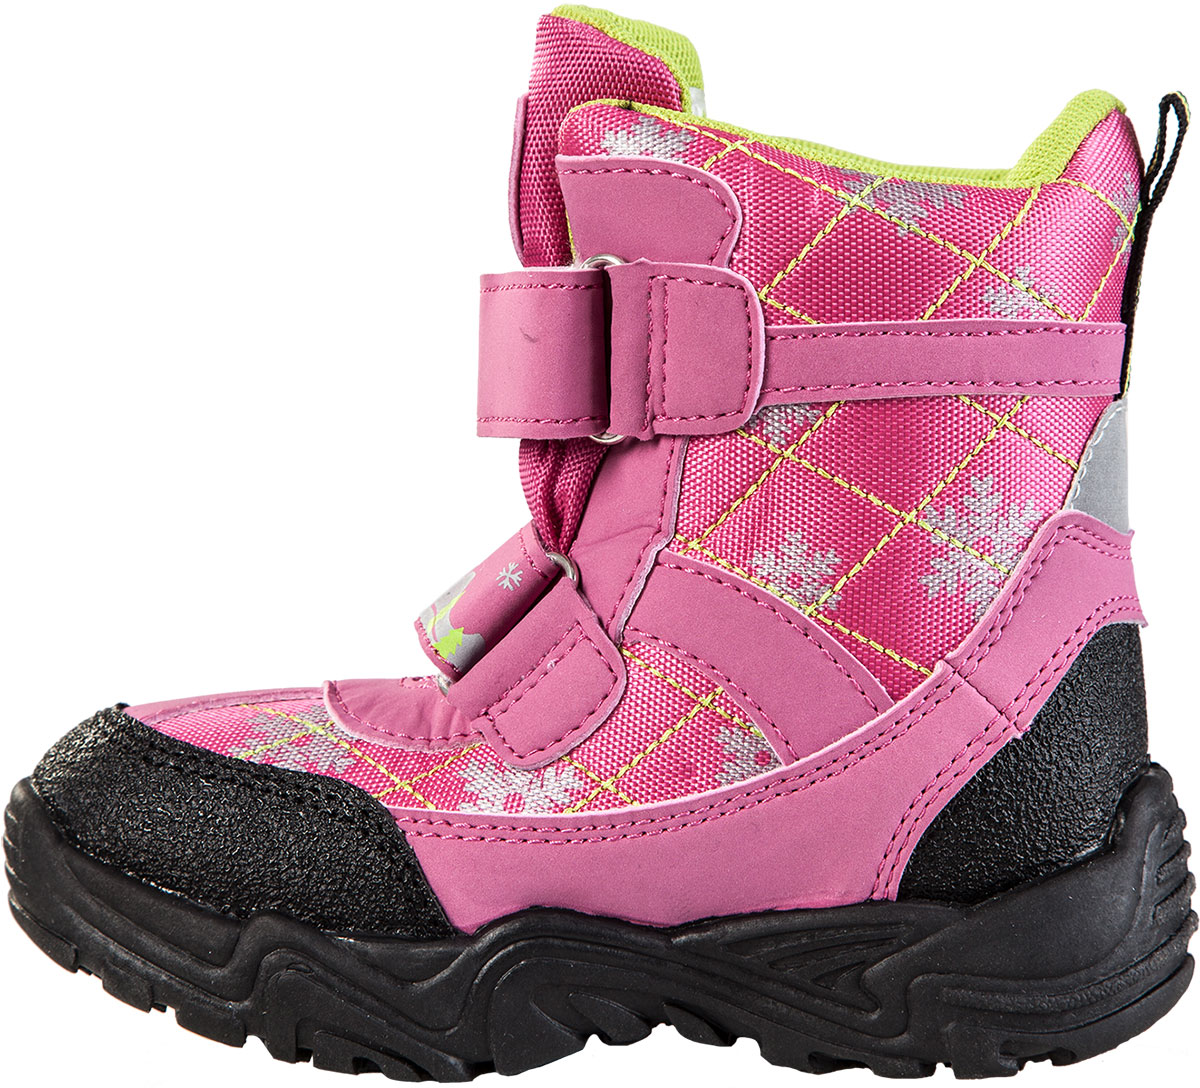 NORNY - Children's winter shoes